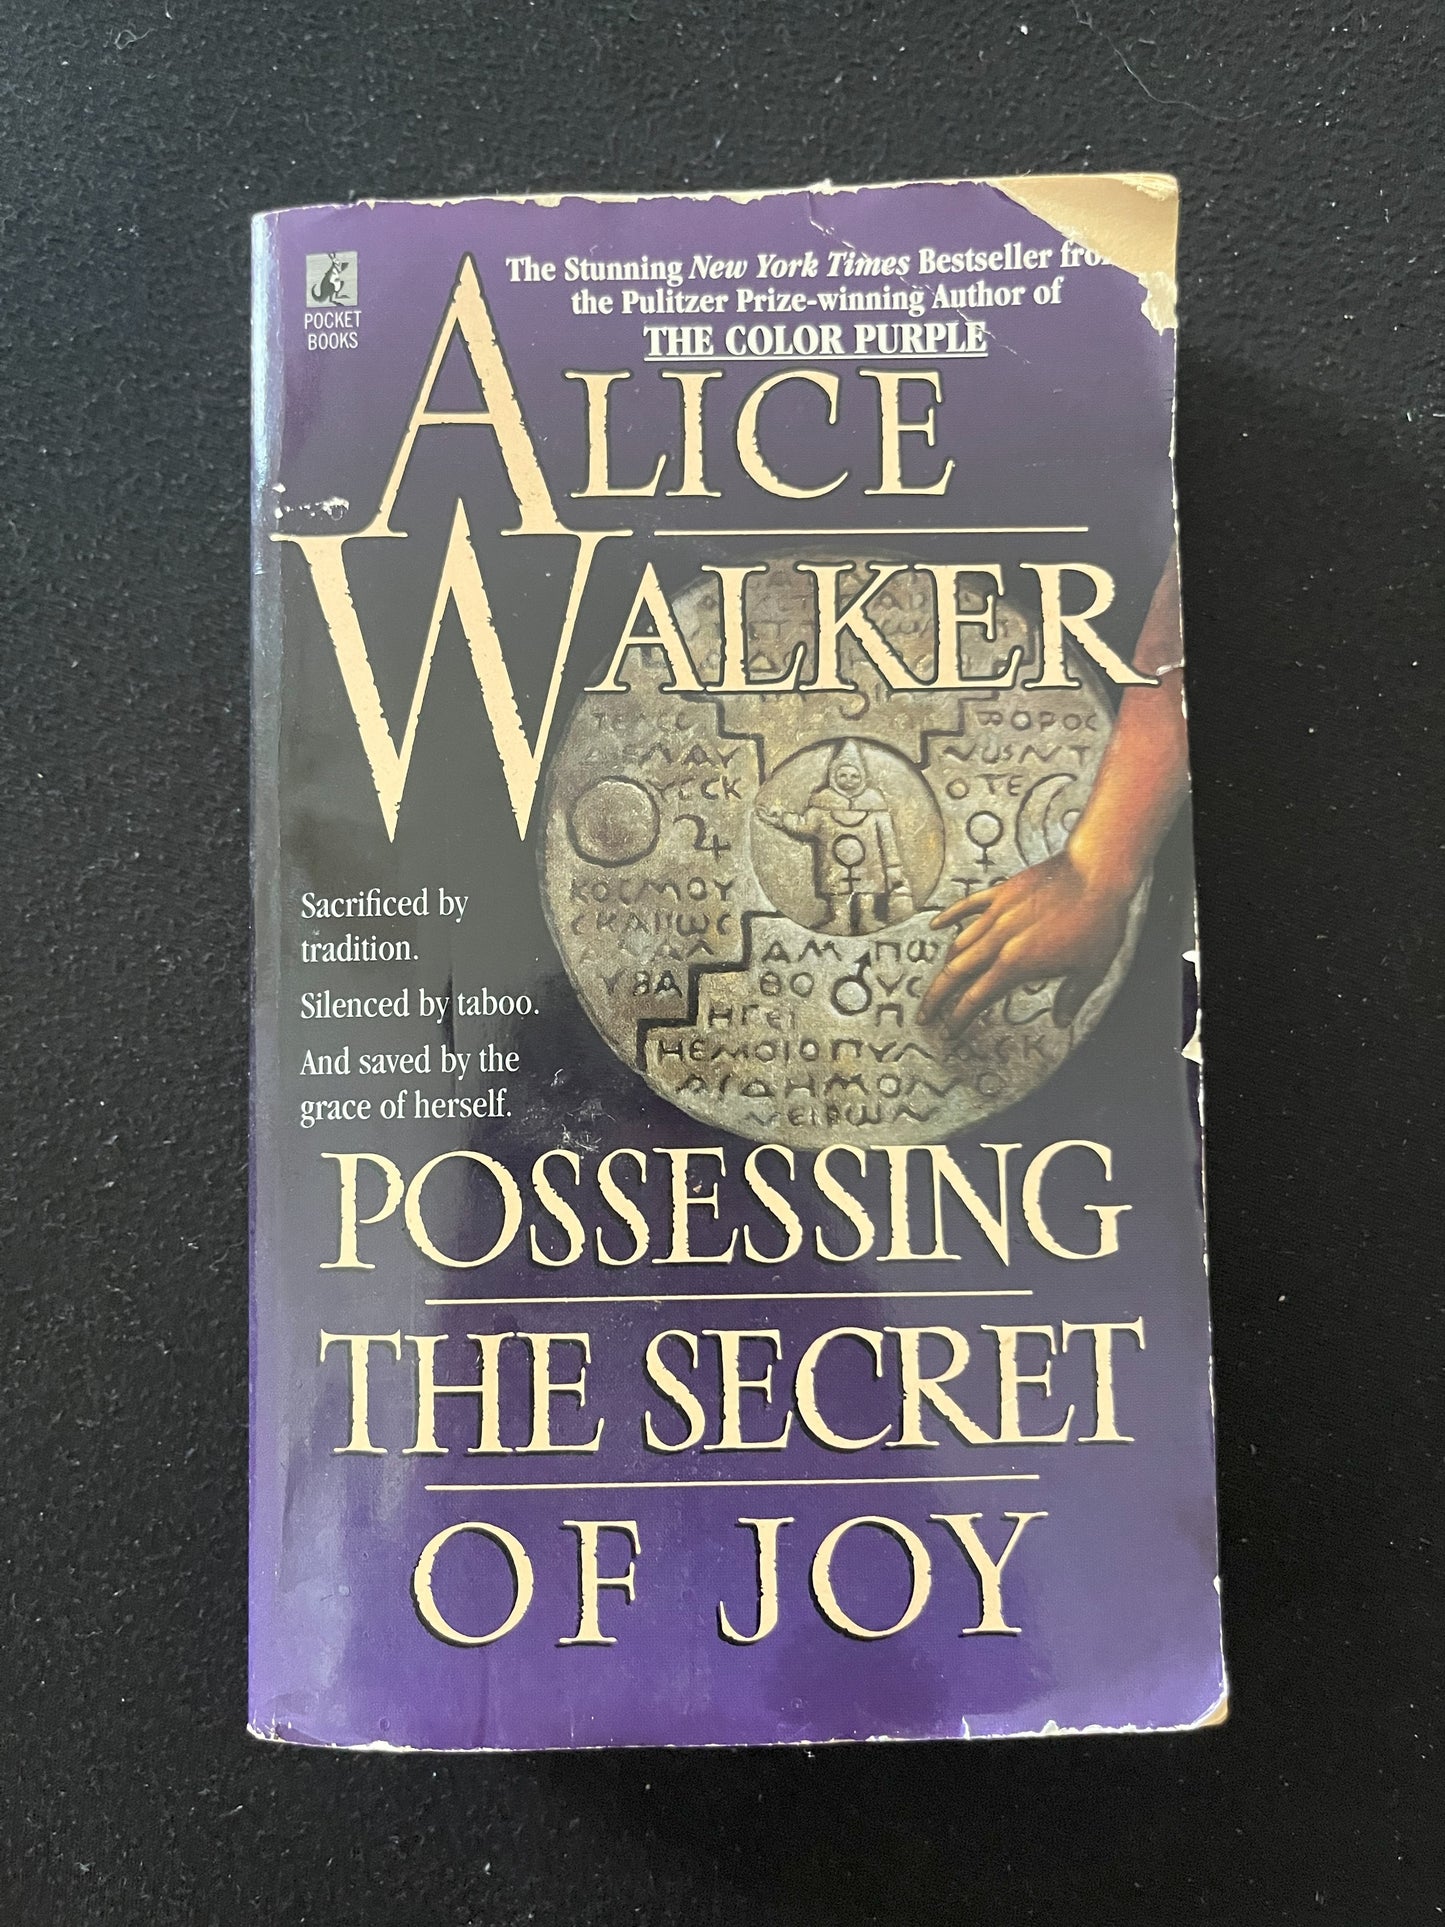 POSSESSING THE SECRET OF JOY by Alice Walker